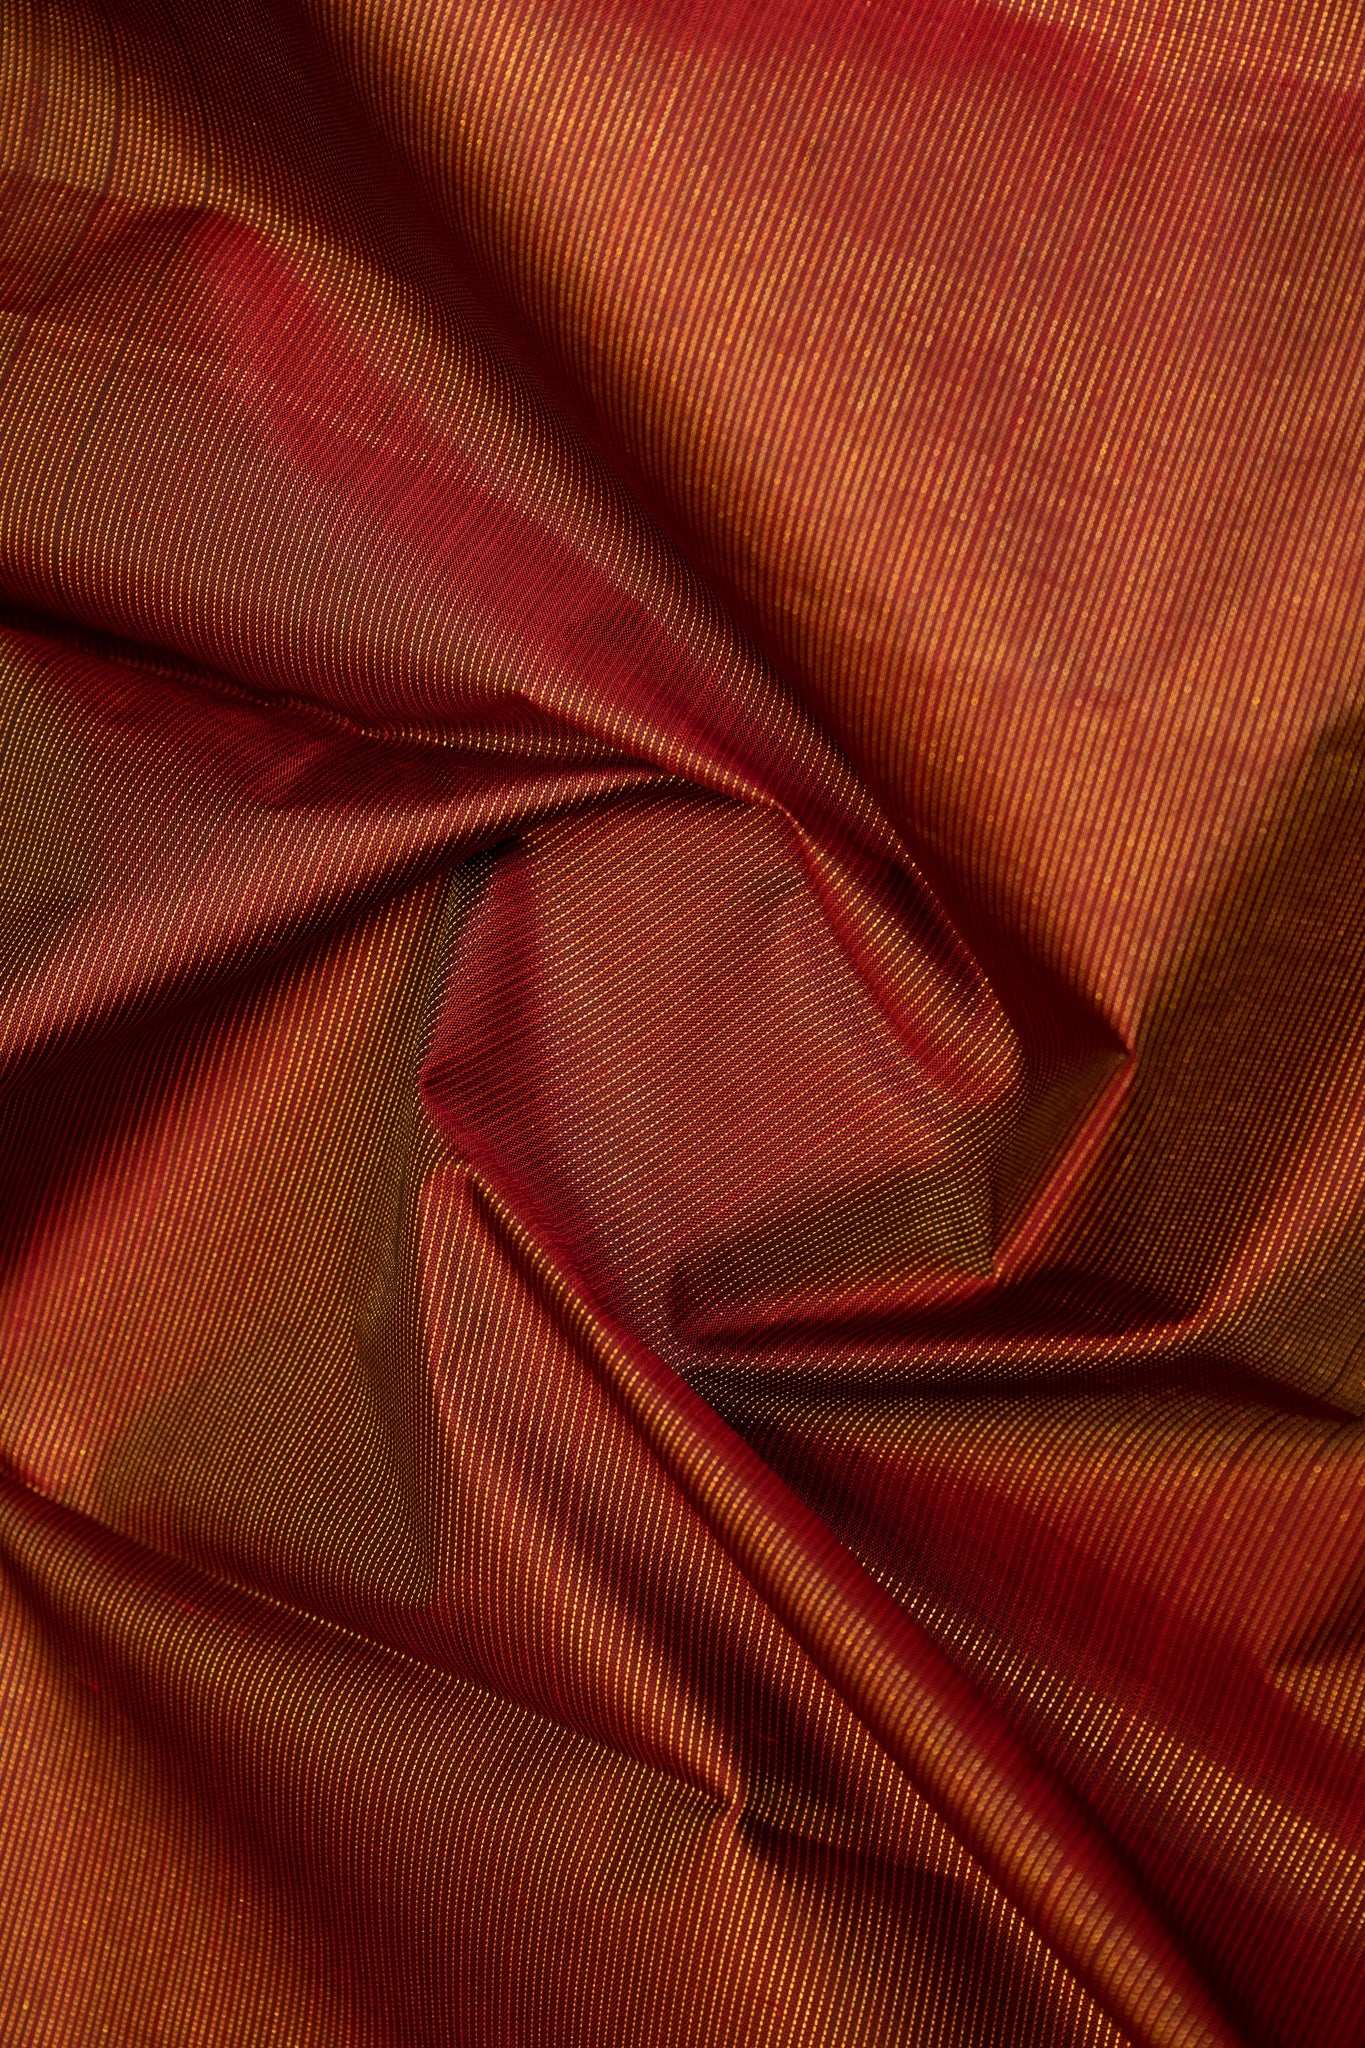 Maroon and Rust Orange Zari Seer Traditional Pure Kanjivaram Silk Sari - Clio Silks